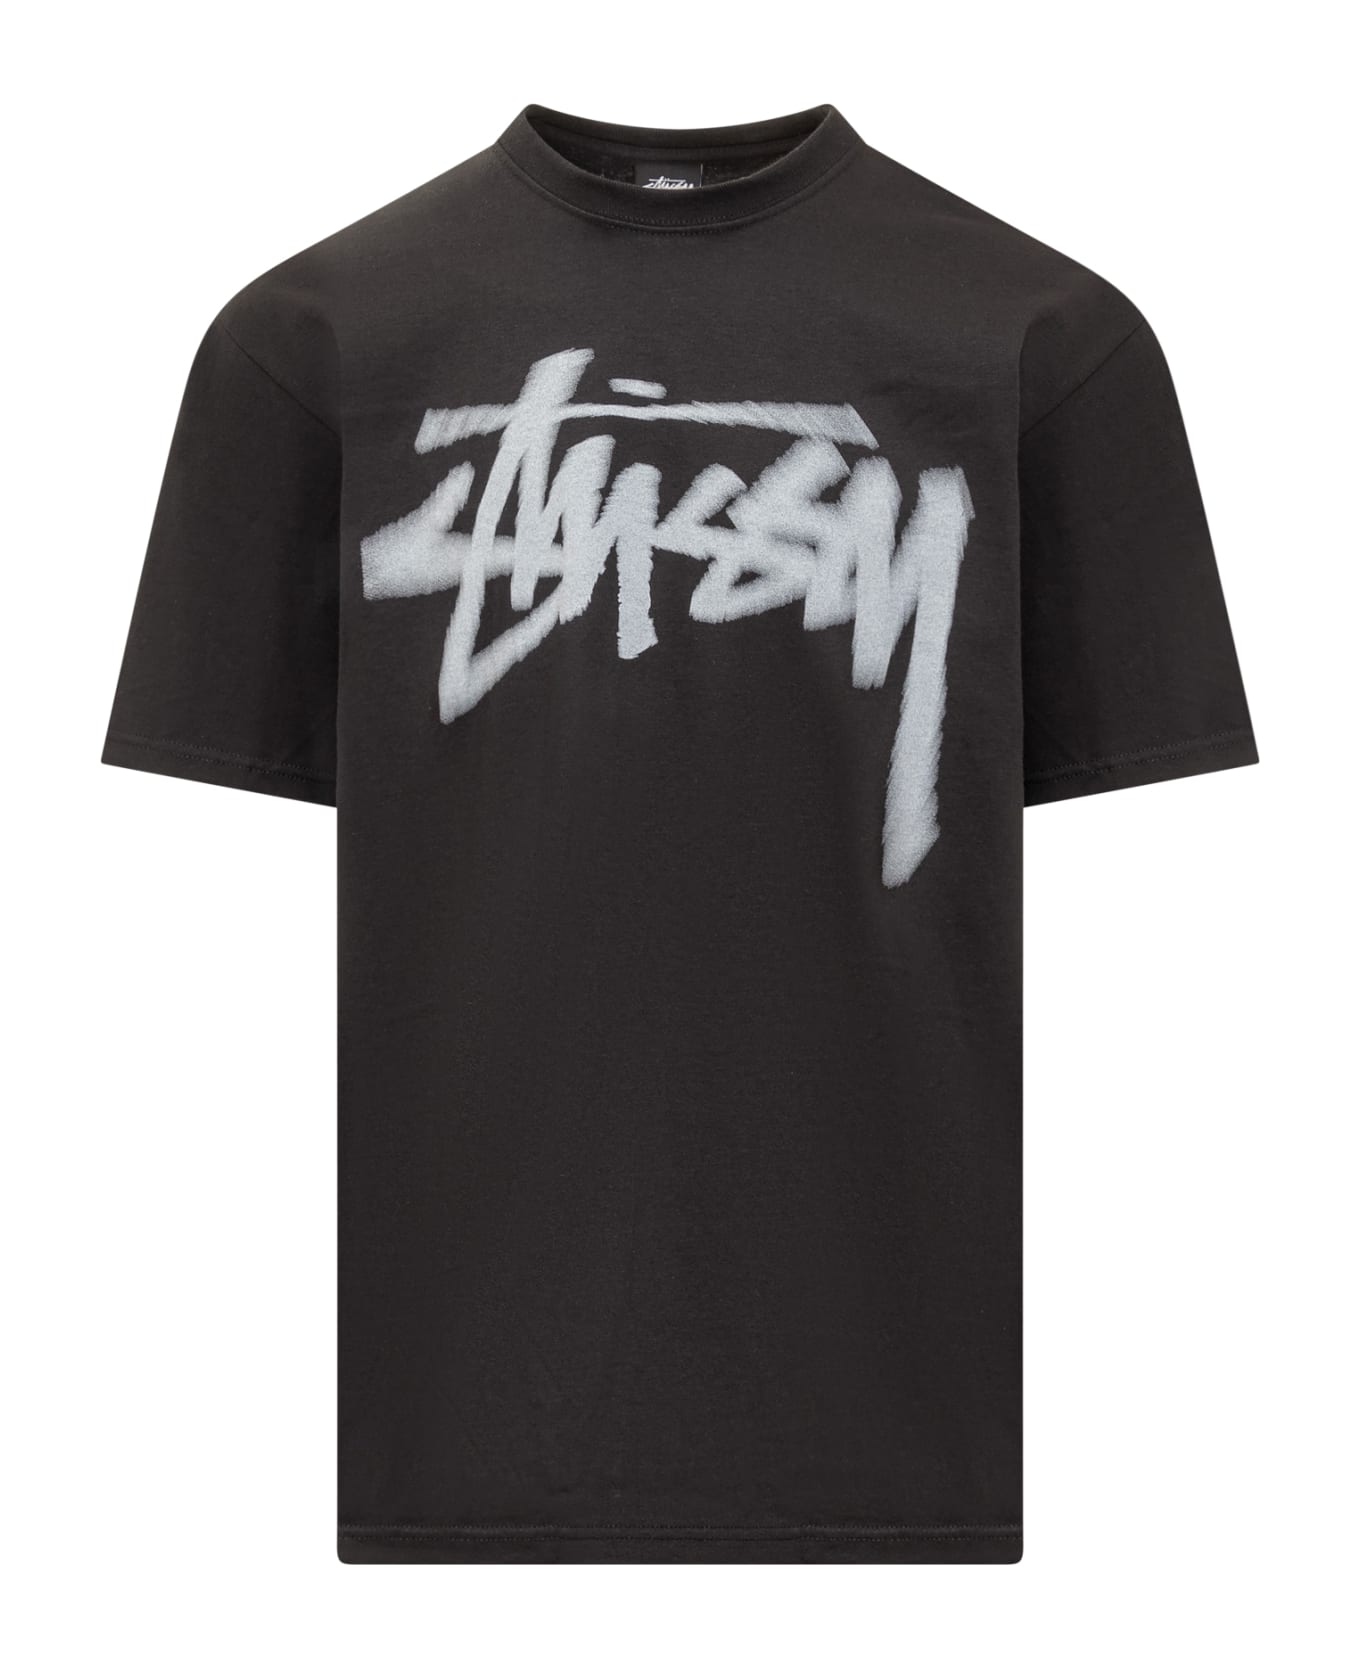 Stussy Dizzy T-shirt - Black